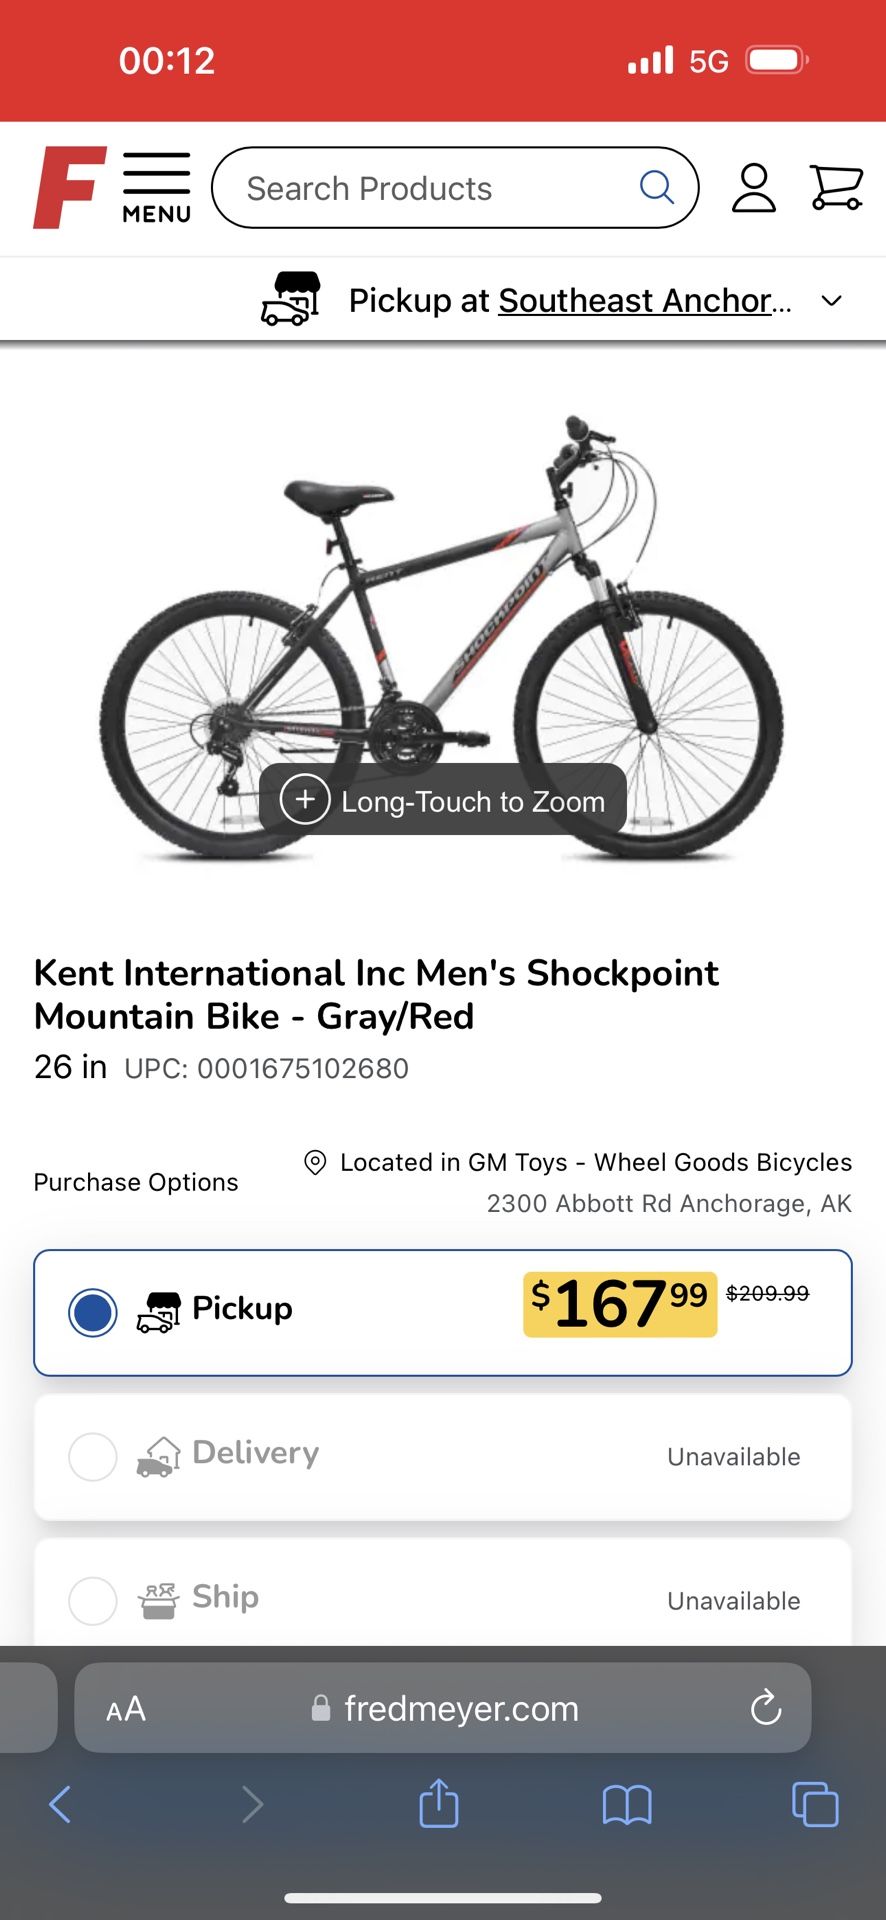 Kent International Inc Men's Shockpoint Mountain Bike - Gray/Red